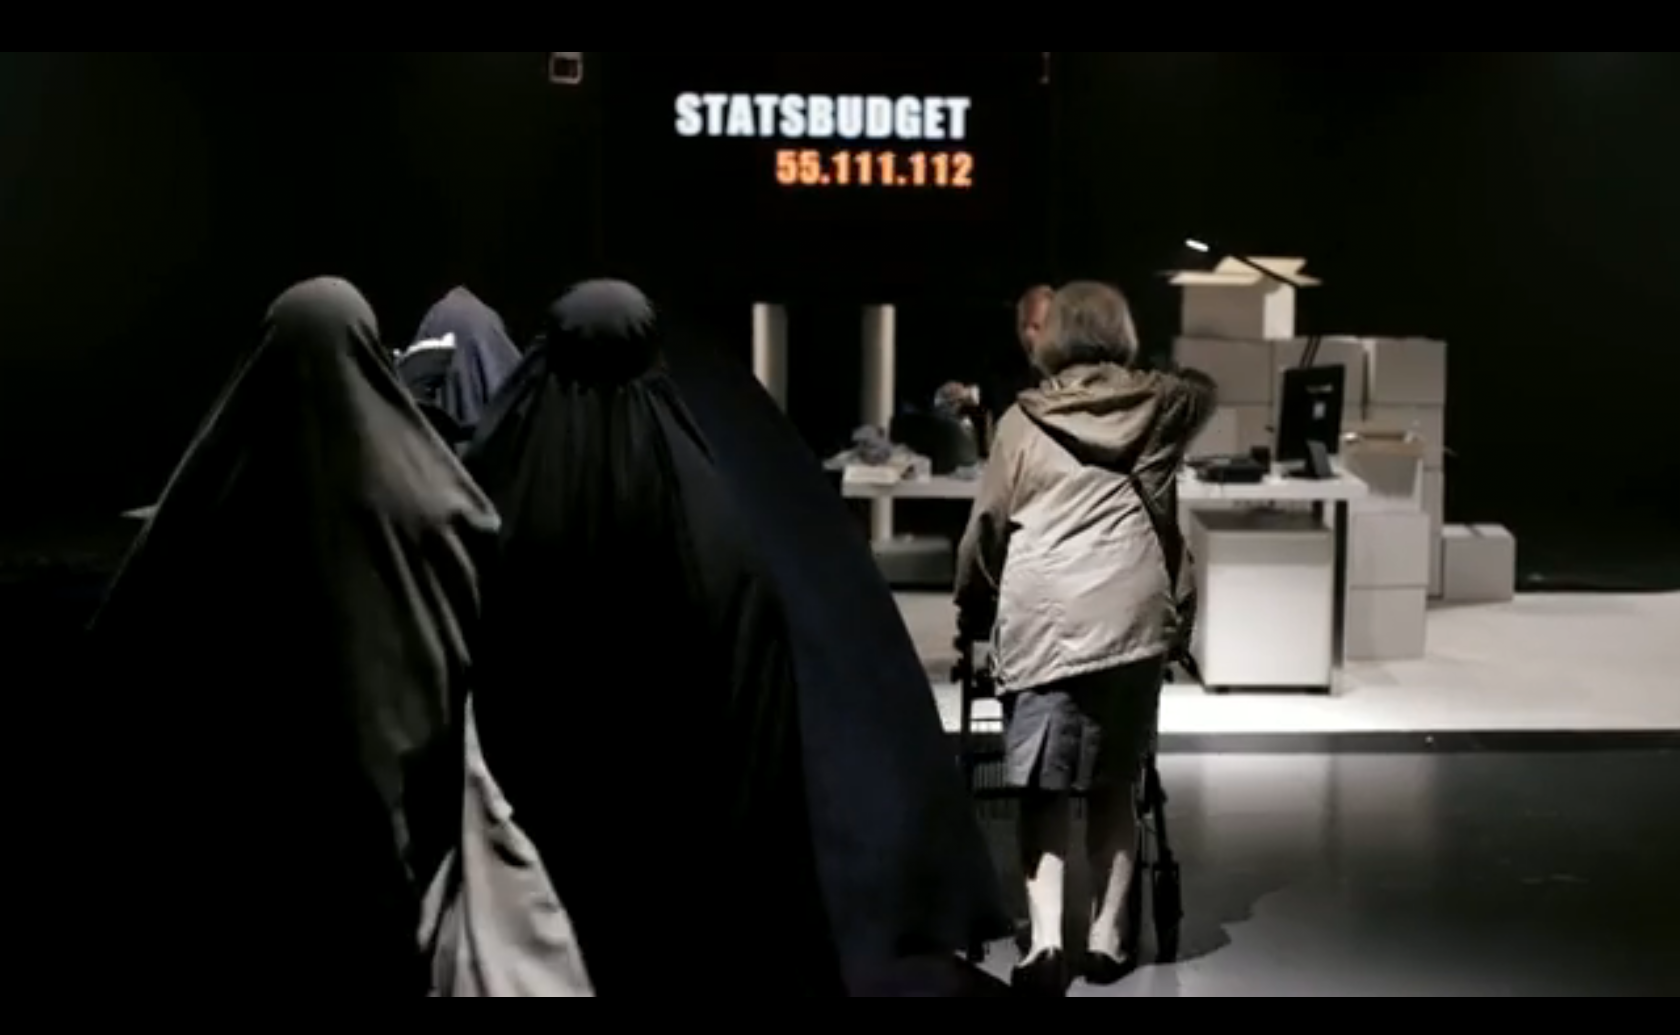 Reklam, reklamfilm, Riksdagsvalet 2010, Sverigedemokraterna